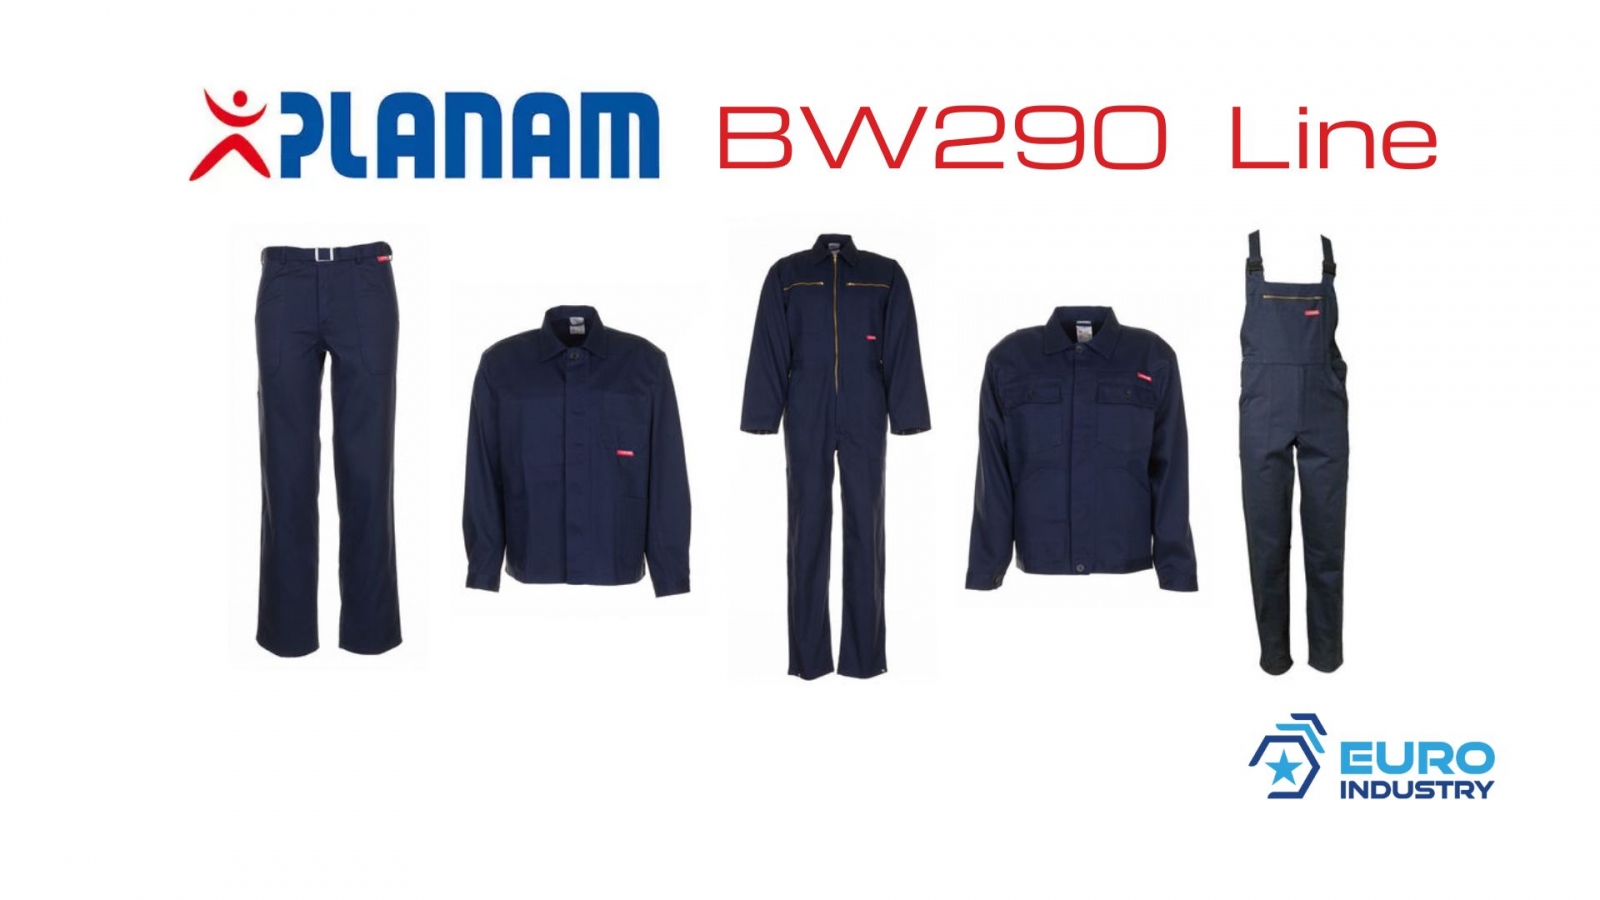 pics/Planam/0127/planam-bw-290-linie-hydronblau-baumwolle-details.jpg